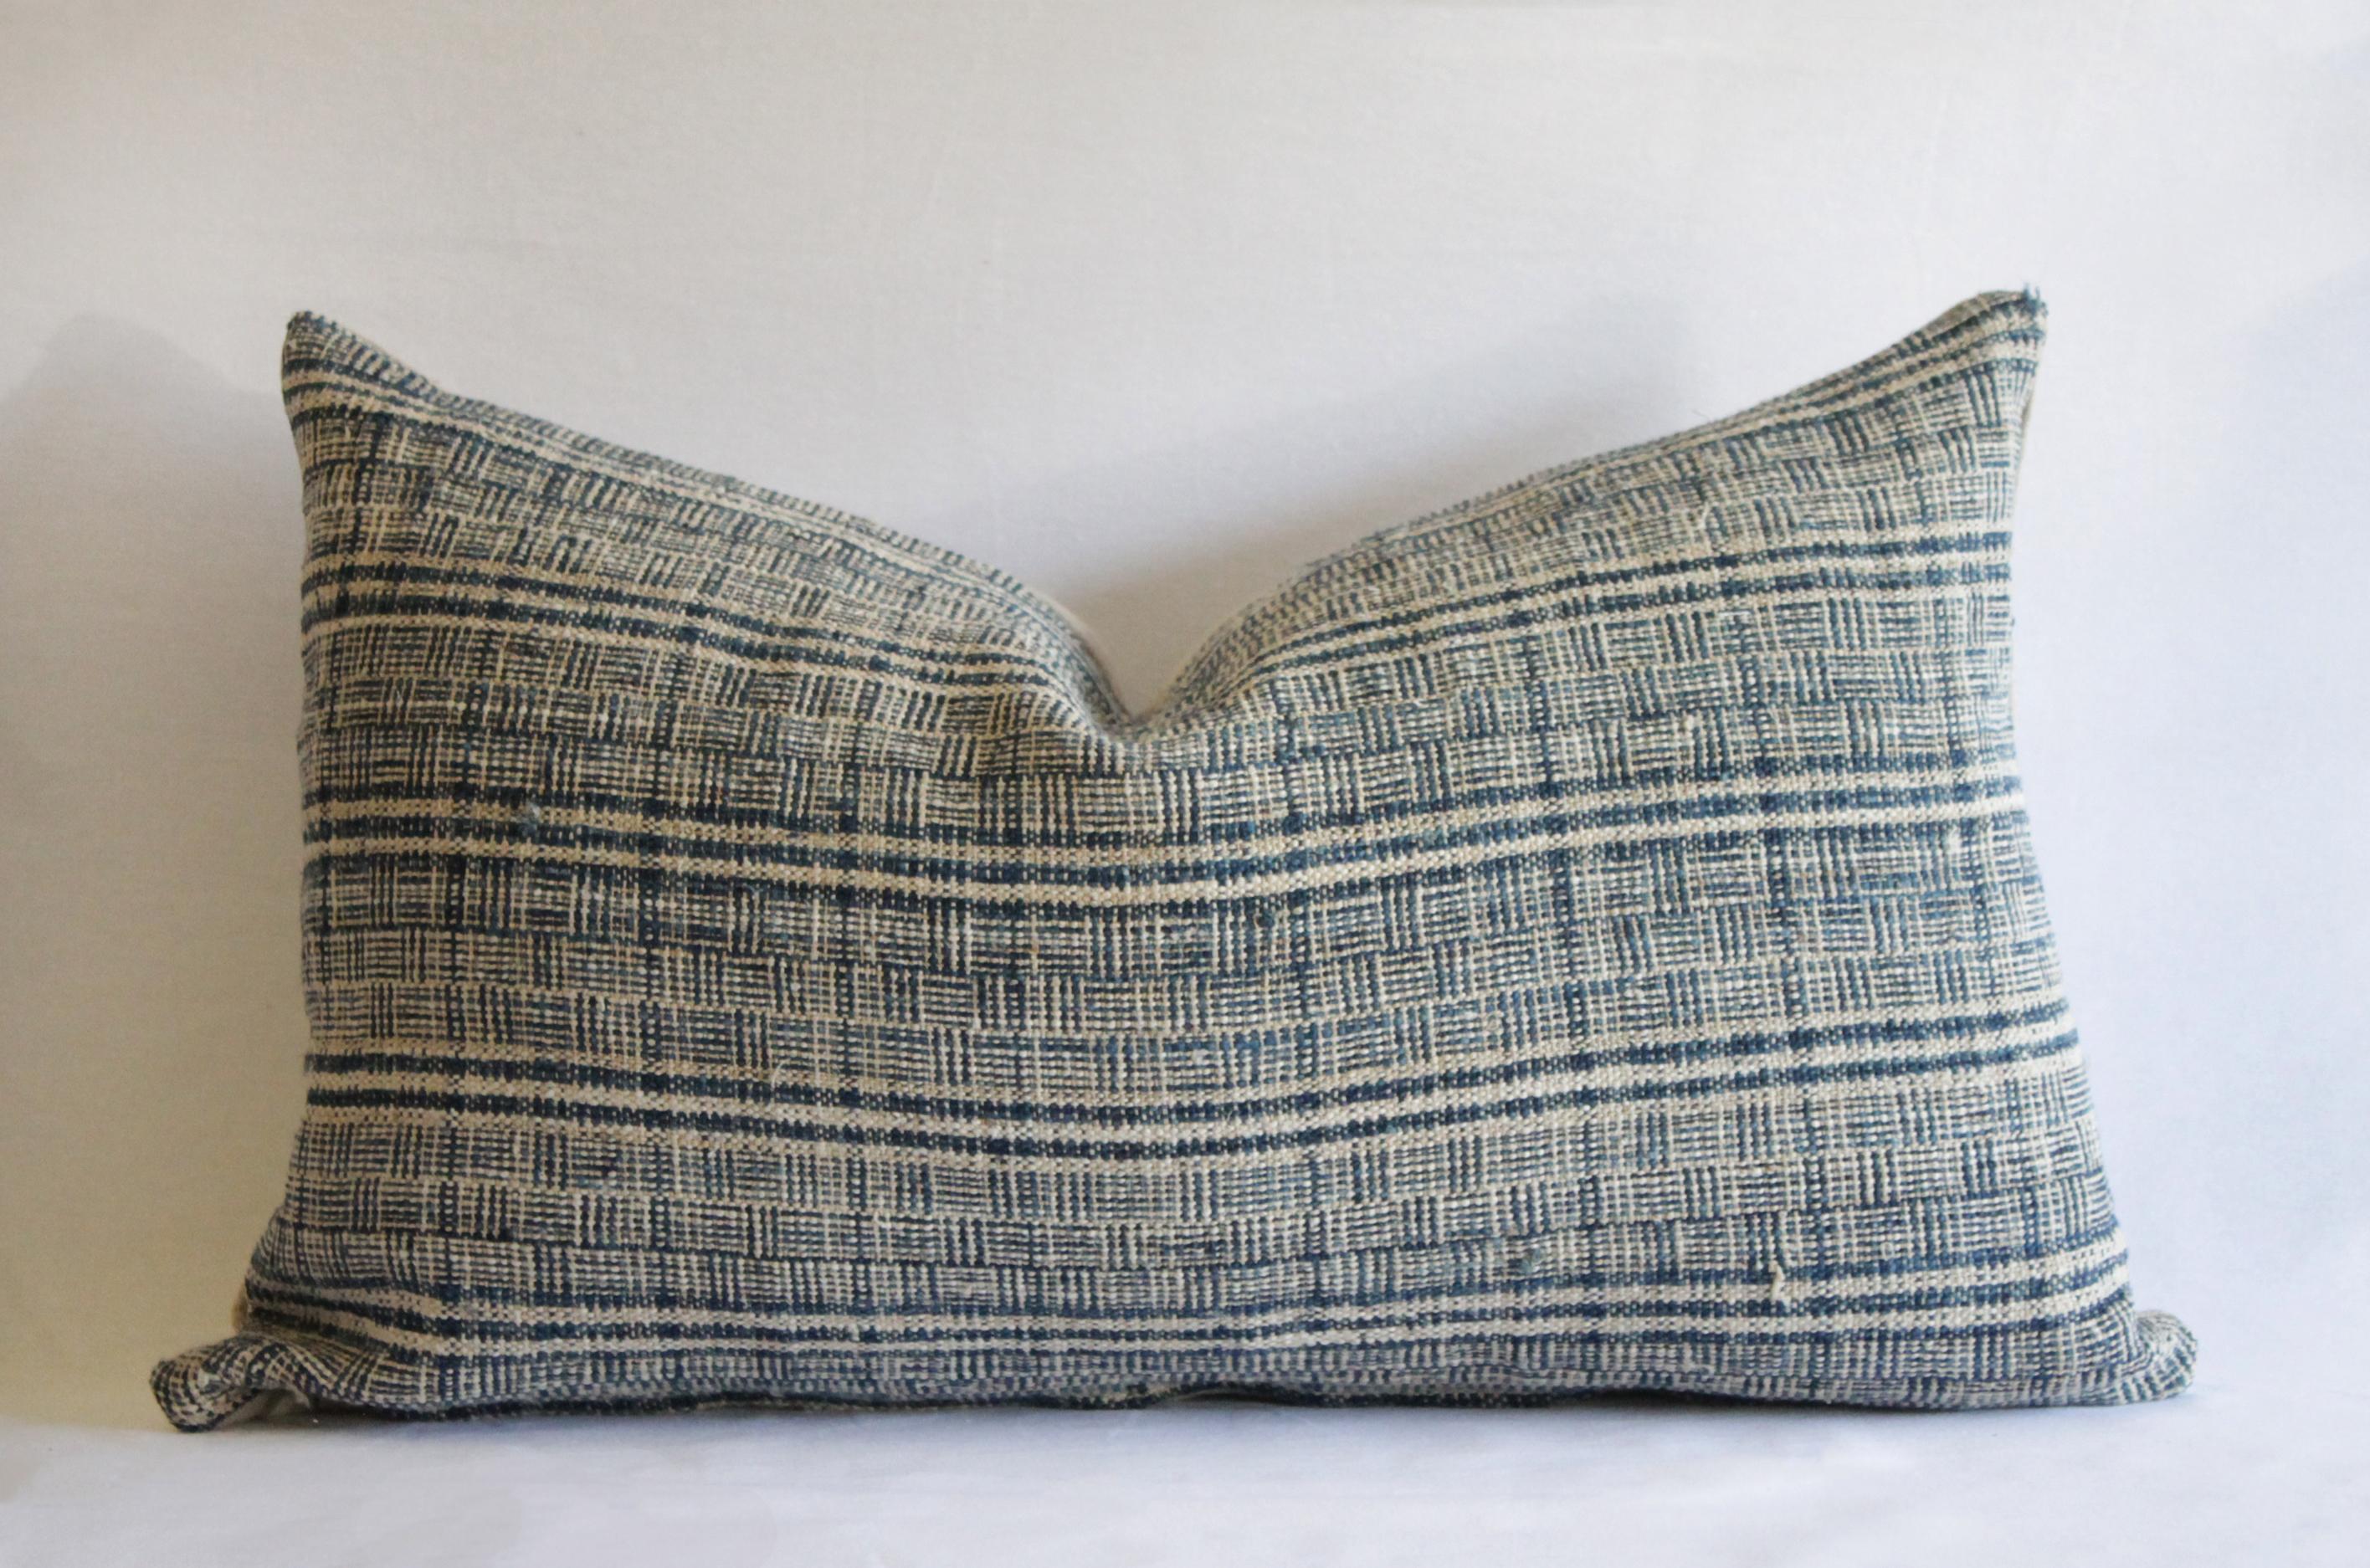 (CUSTOM LISTING FOR CLIENT) Antique Homespun Linen Lumbar pillows made from a vintage indigo and natural stripe grain sack linen, with a solid natural flax linen backing. Hidden zipper closure.
Measures: 15